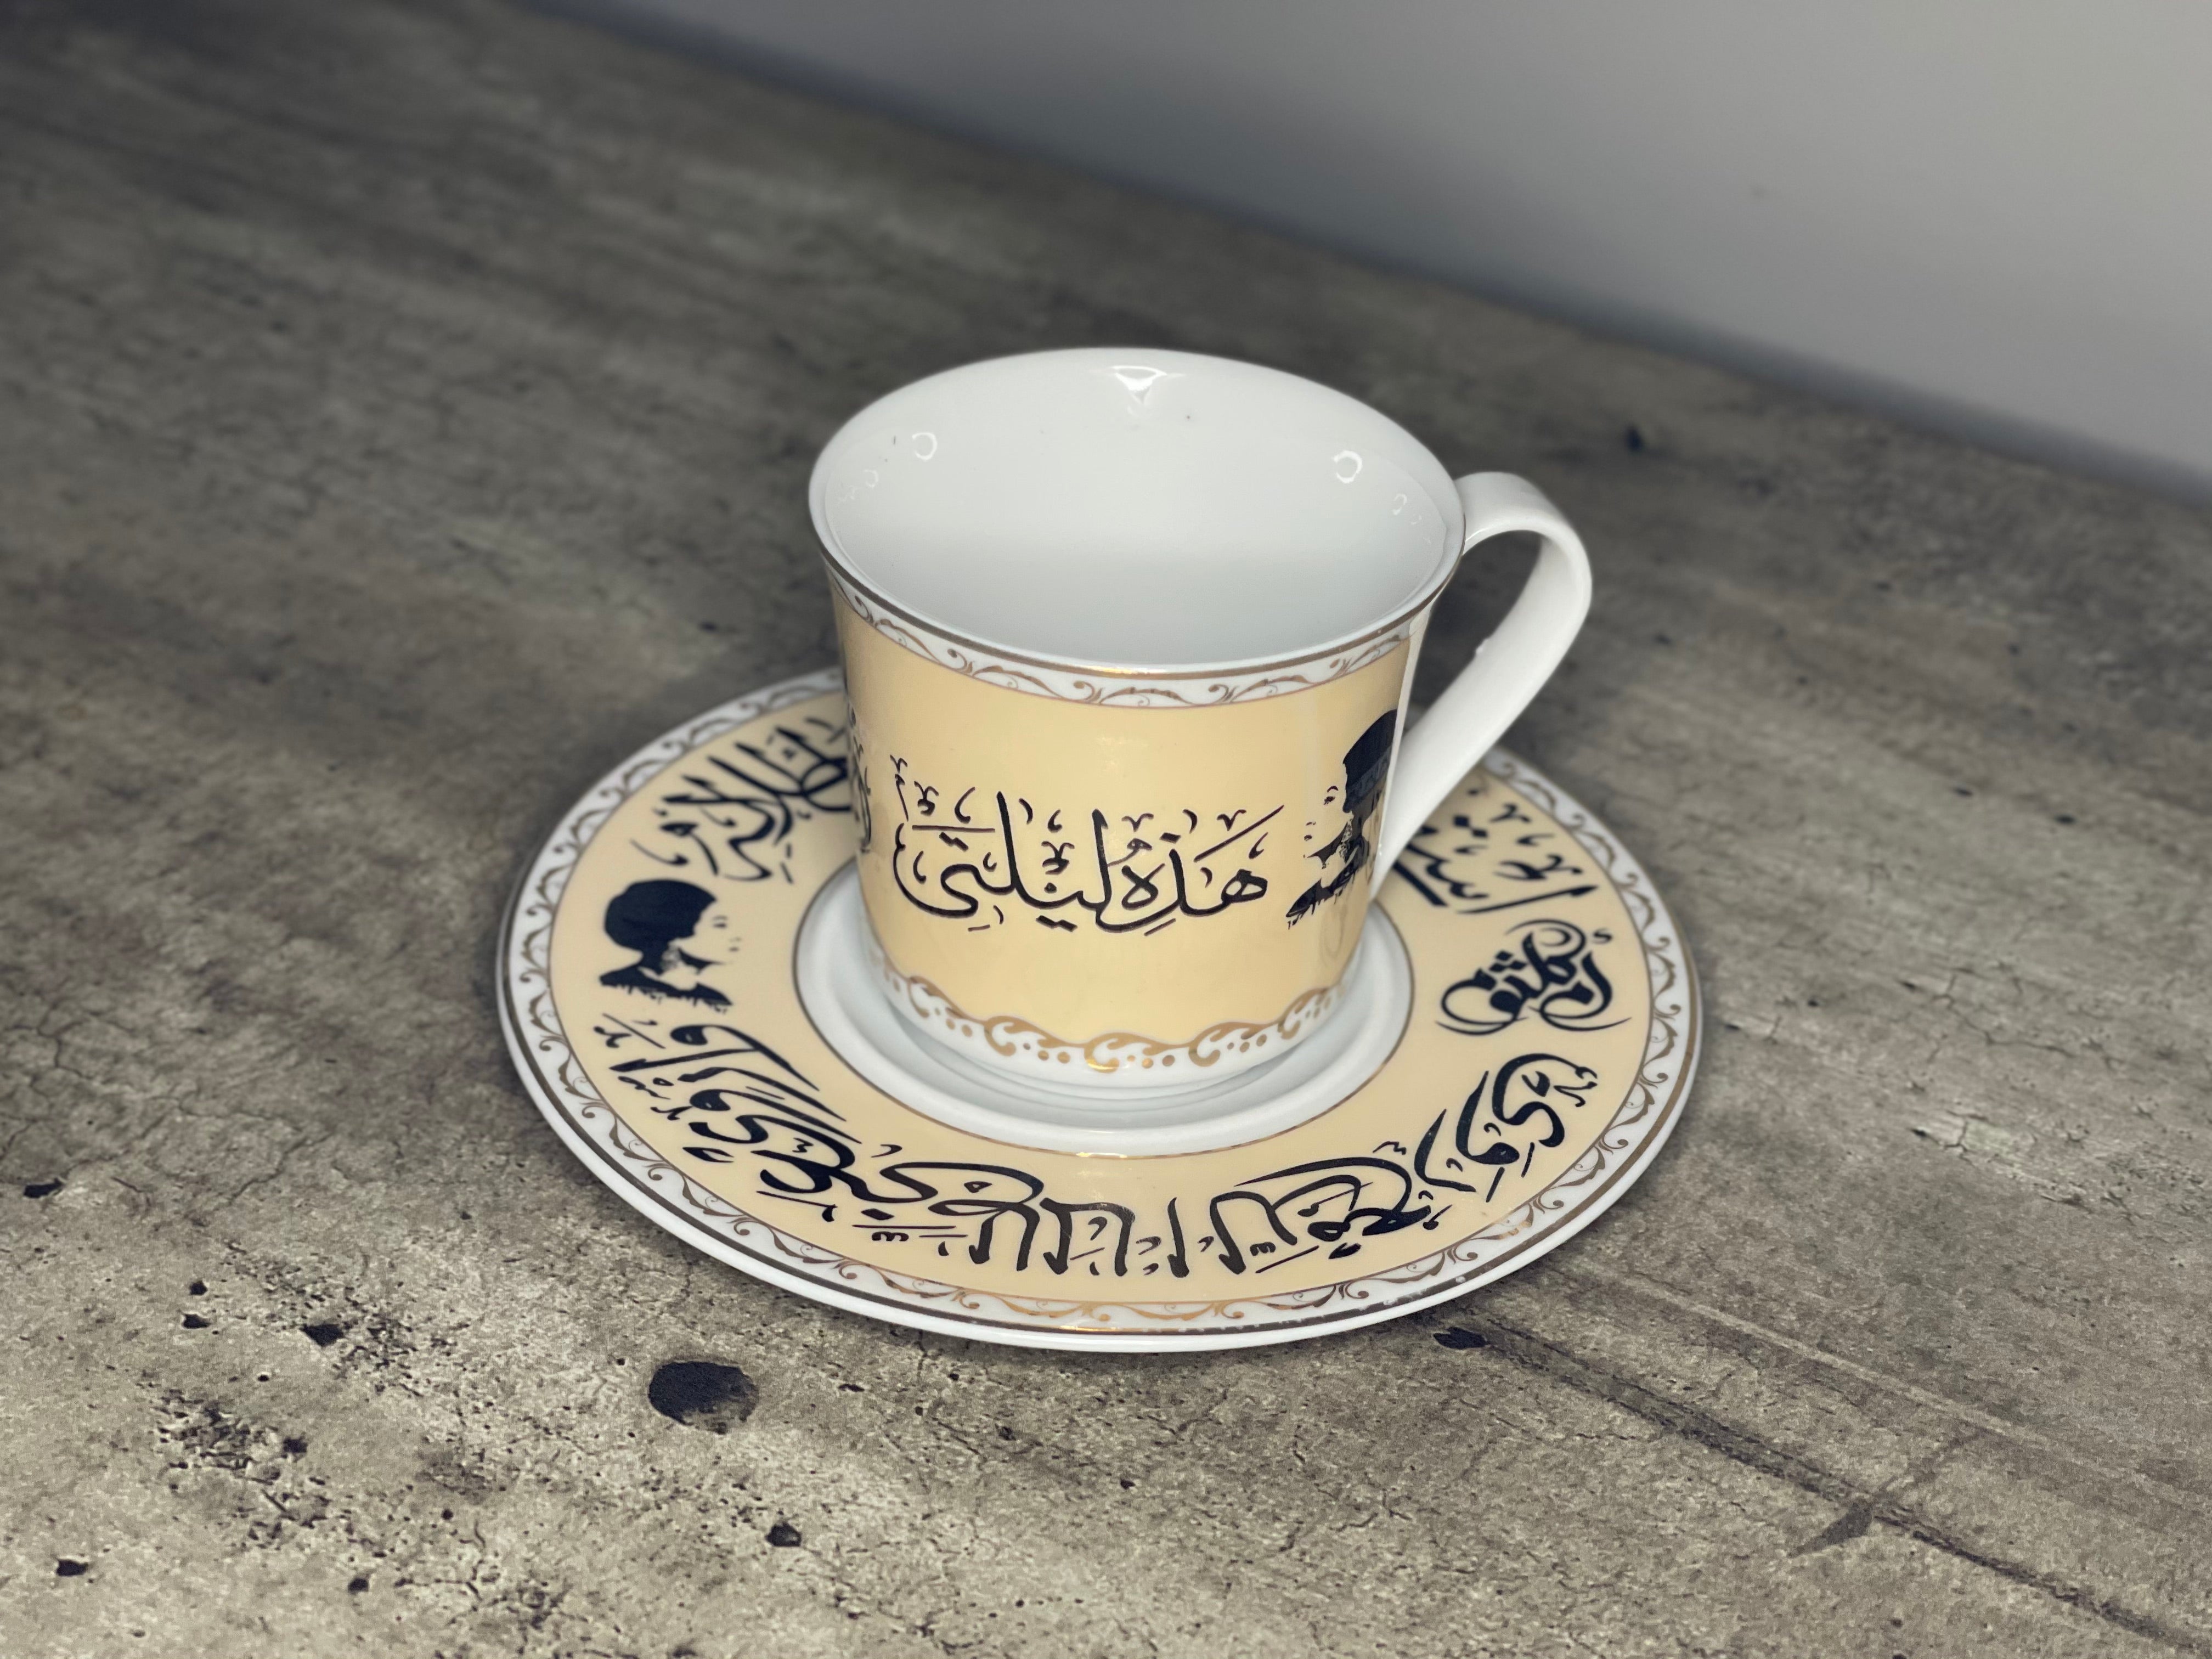 Espresso Cup with Saucer set - Pastel colors